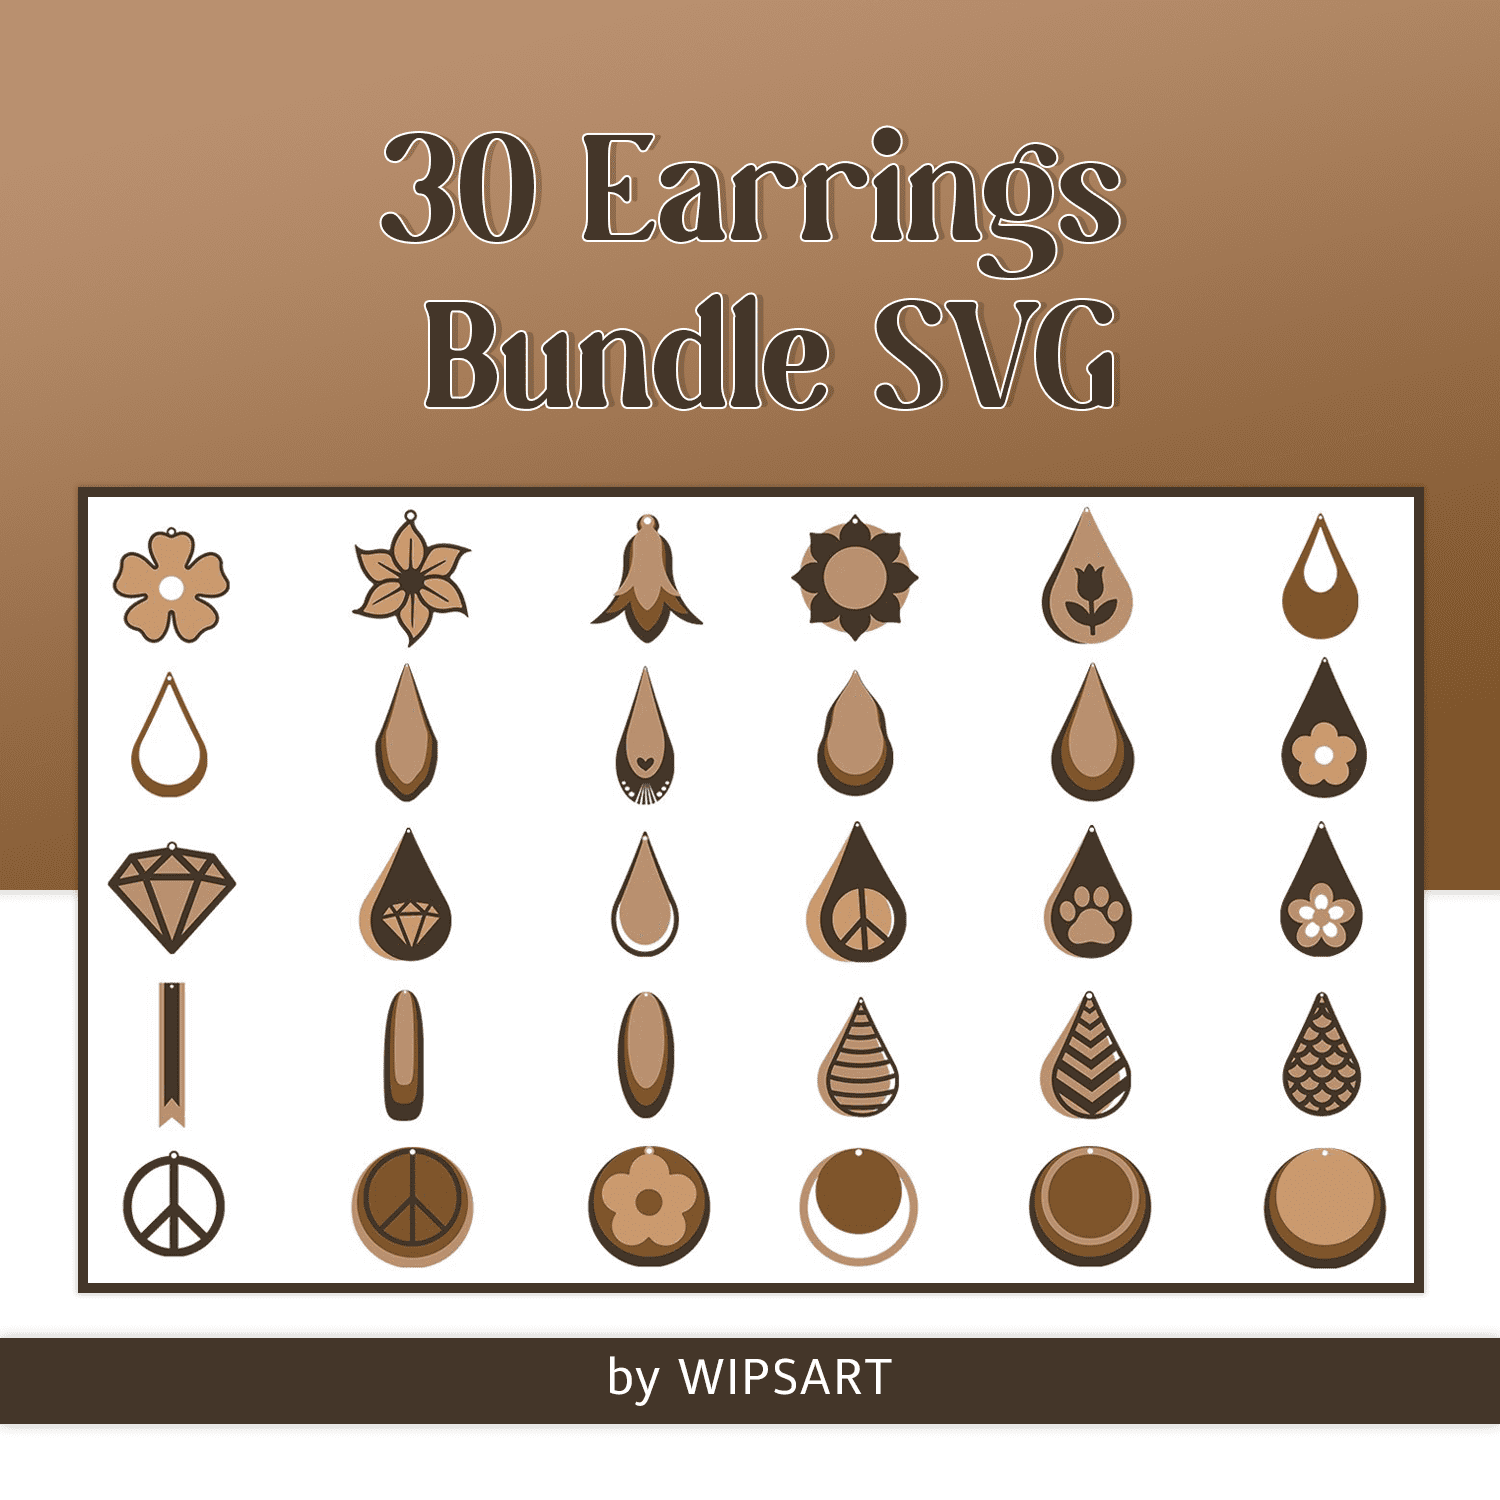 SALE! 30 Earrings Bundle SVG, Earring svg, Pendant svg cover.